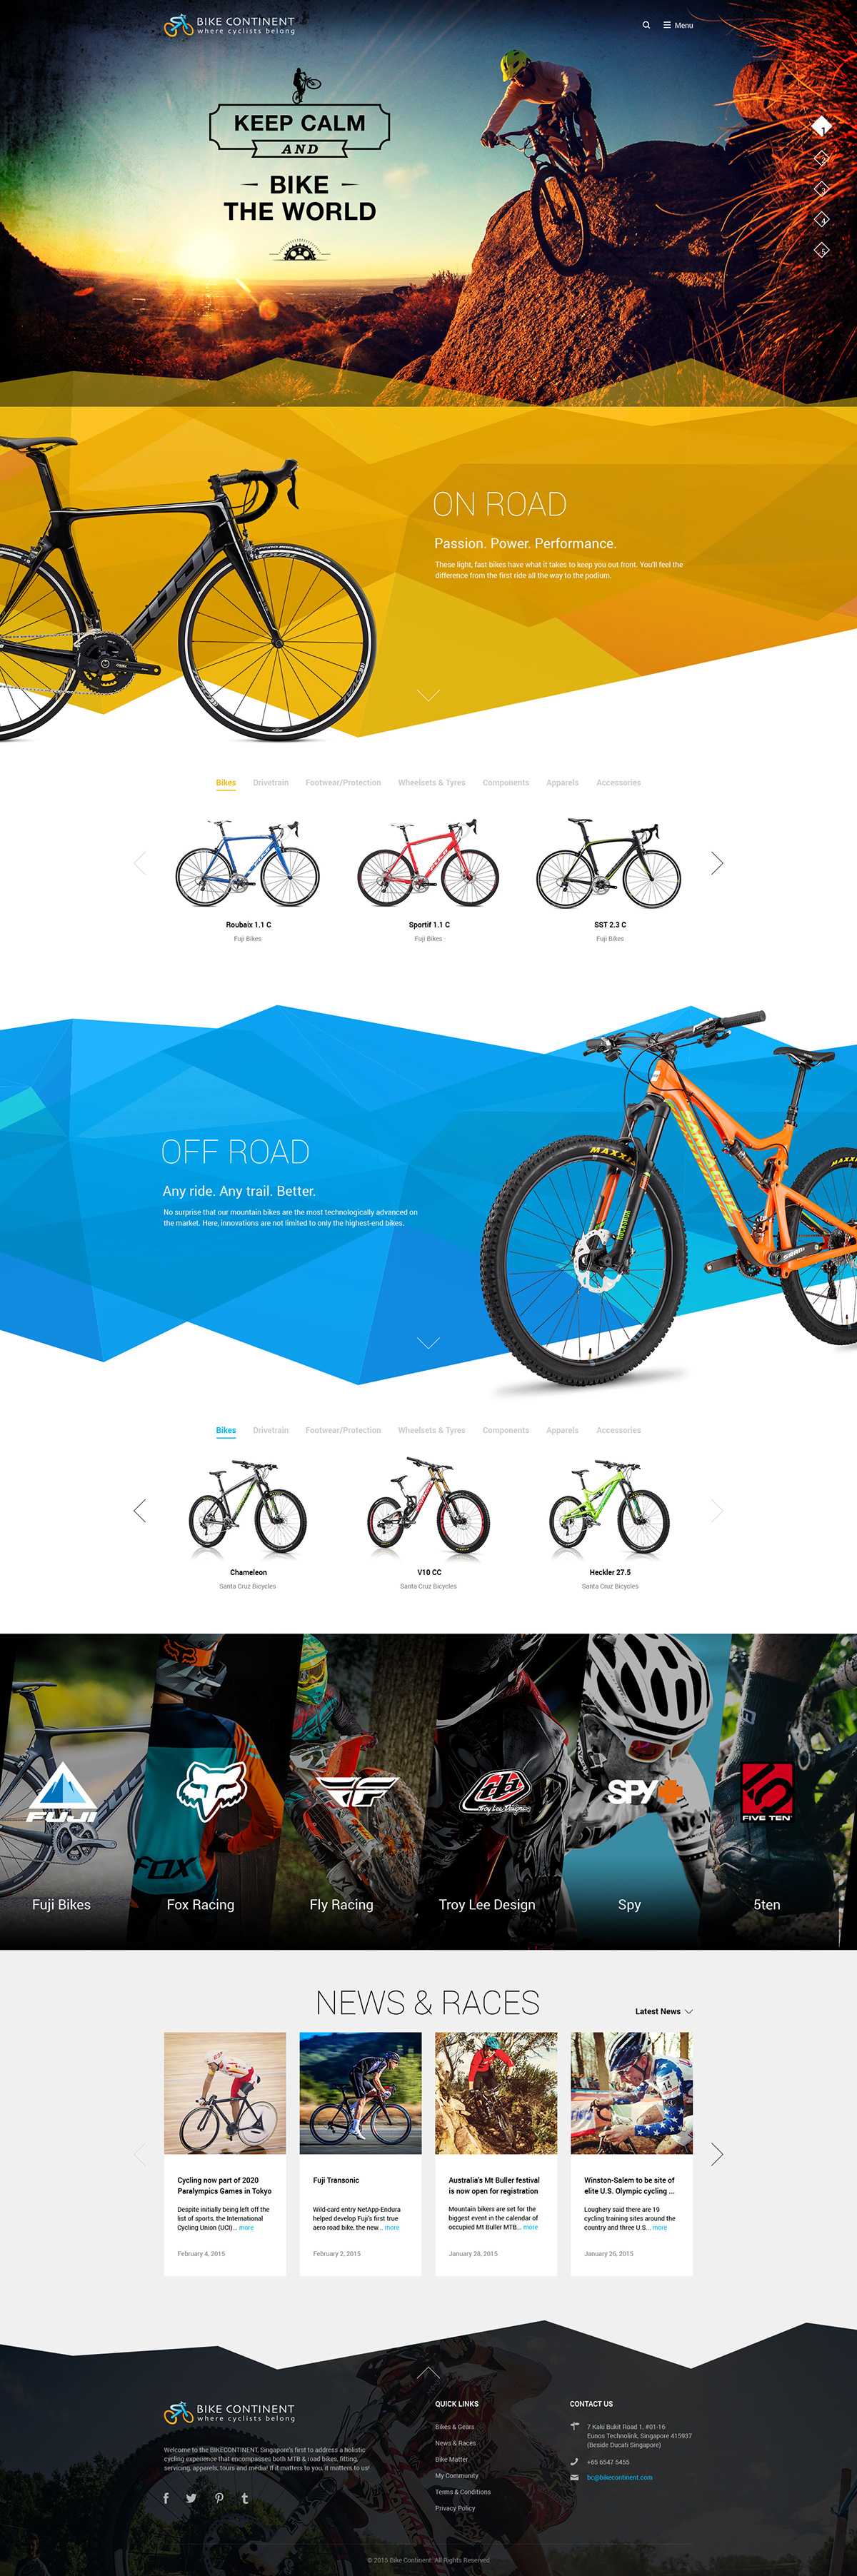 Bicycle Bike singapore application app